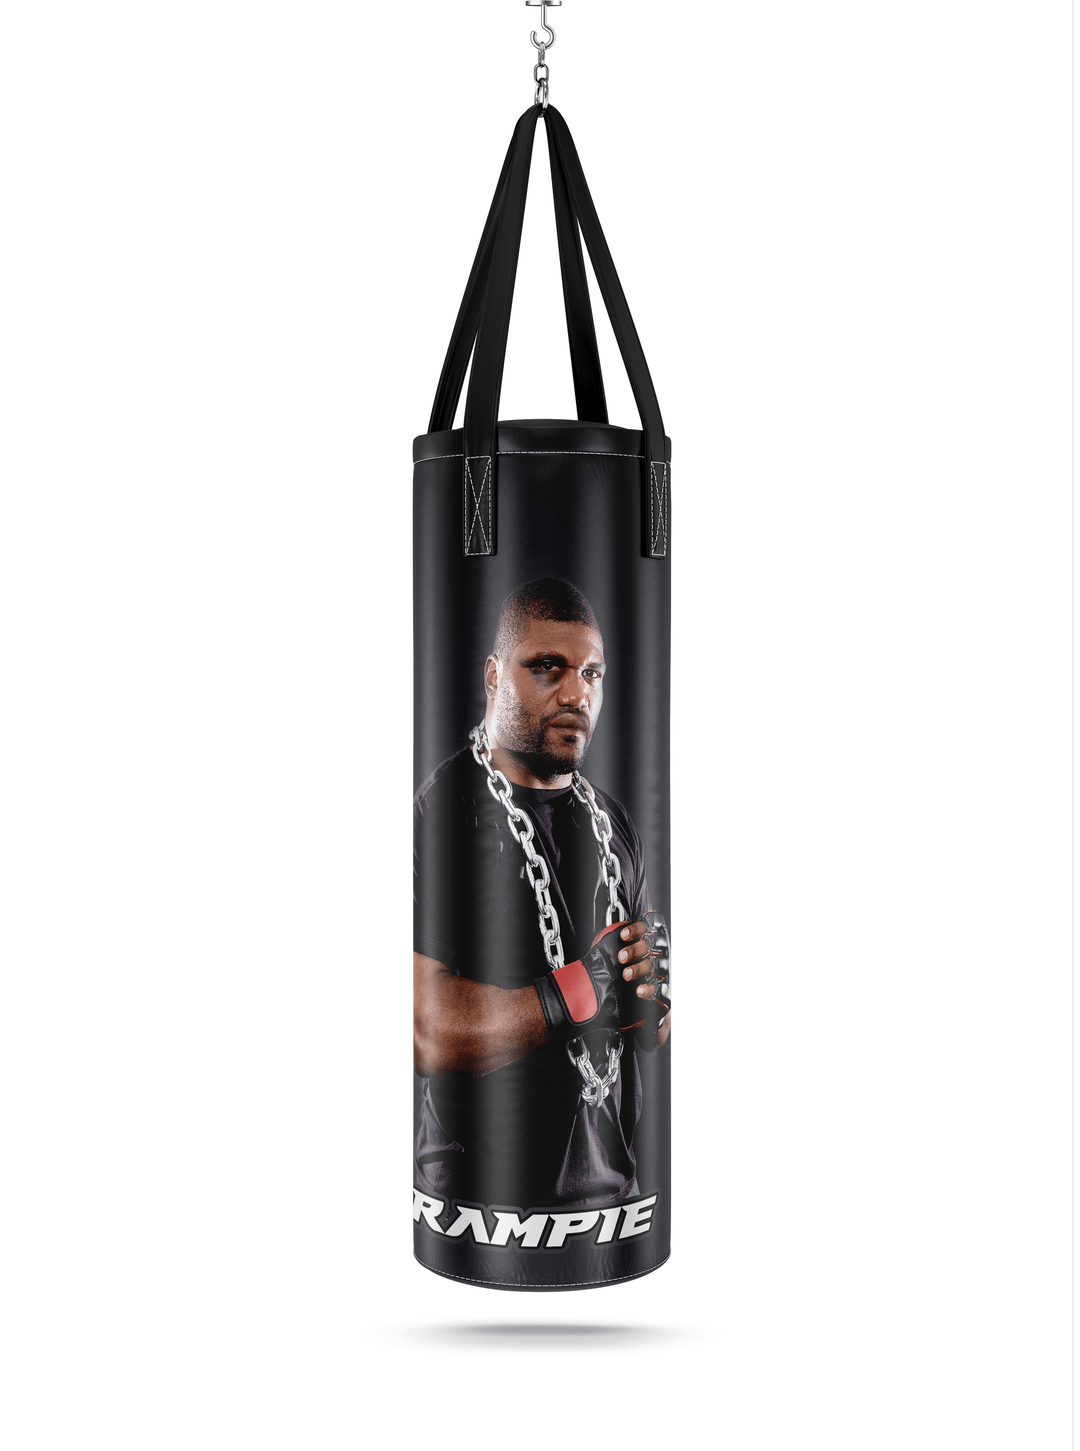 LGC Official Rampie Punching Bag - Unfilled - Fight.ShopPunching BagsLGC110cm